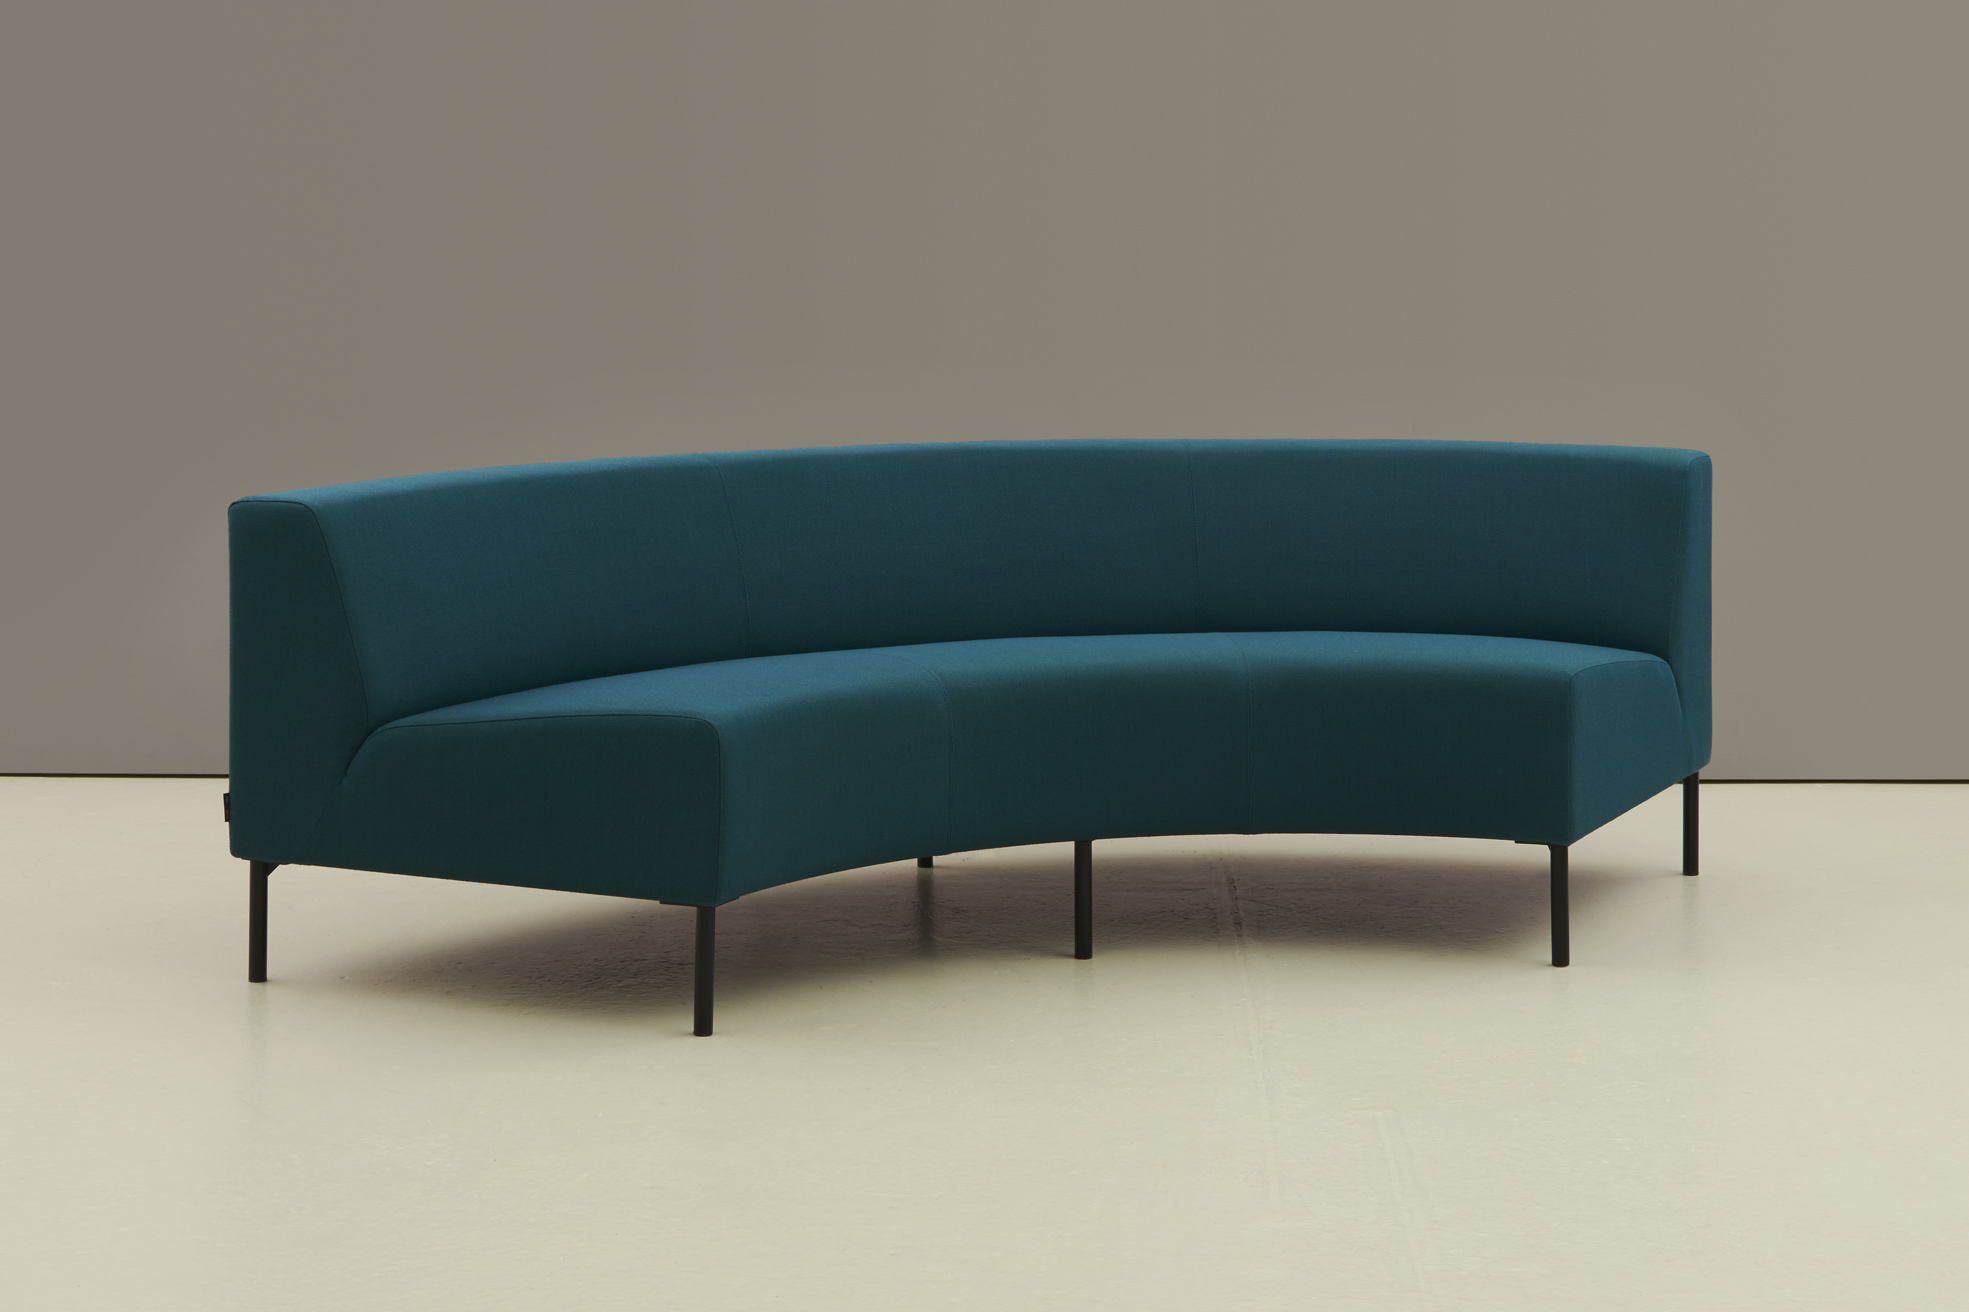 hm18y1 curved sofa (1) (low res).jpg